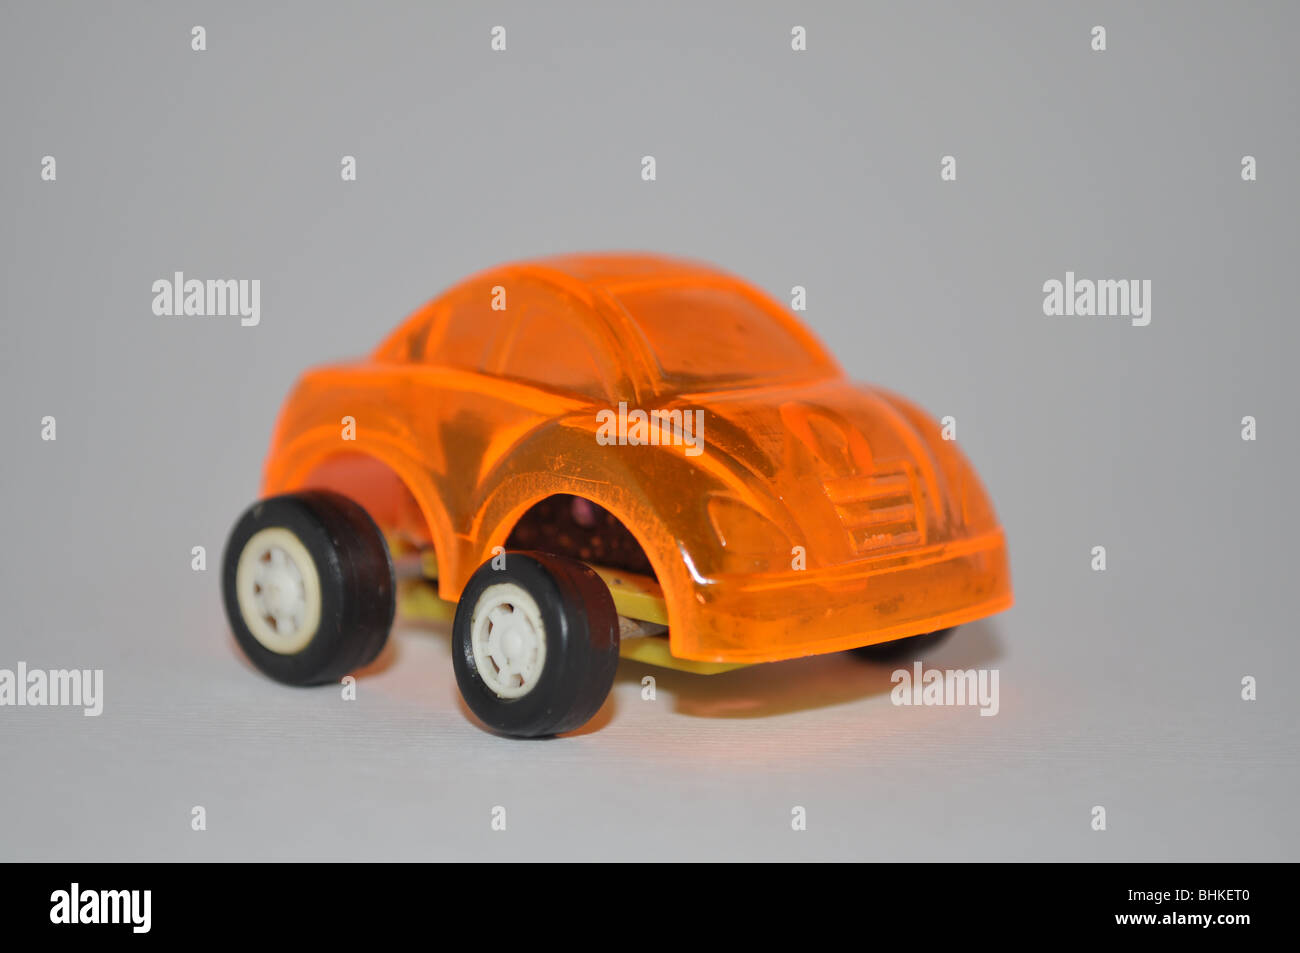 child's plastic toy car Stock Photo